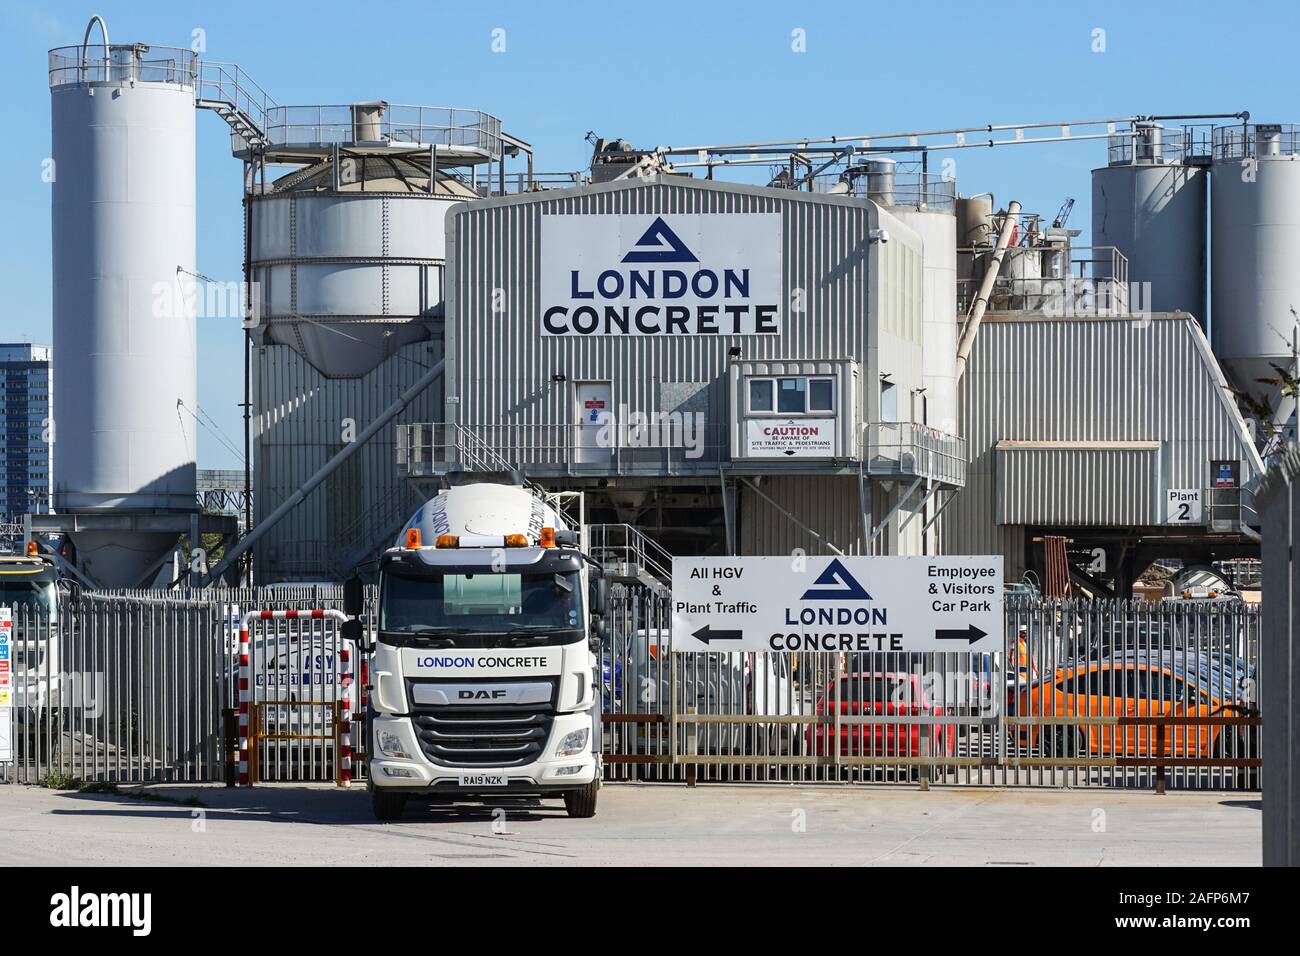 Concrete mixer truck at London Concrete, concrete supplier in London, England, United Kingdom, UK Stock Photo